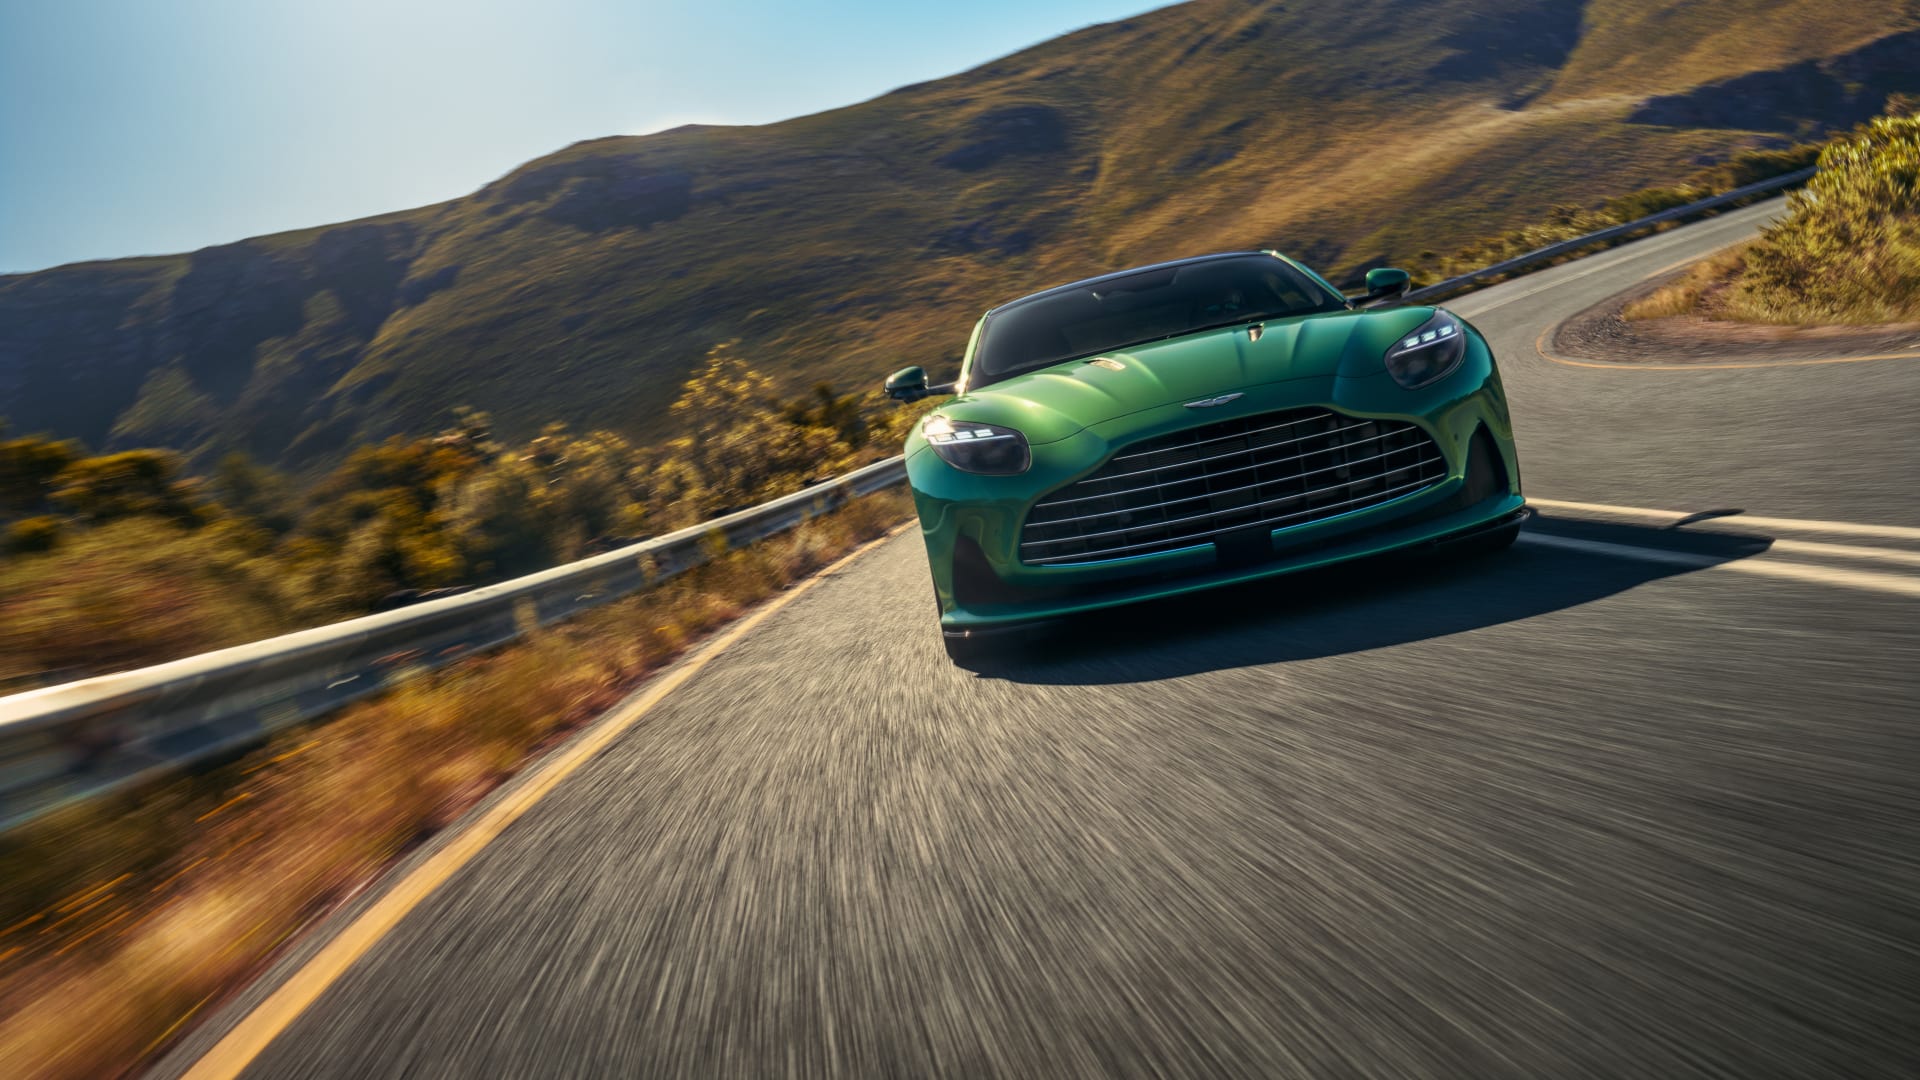 Introducing the Aston Martin DB12